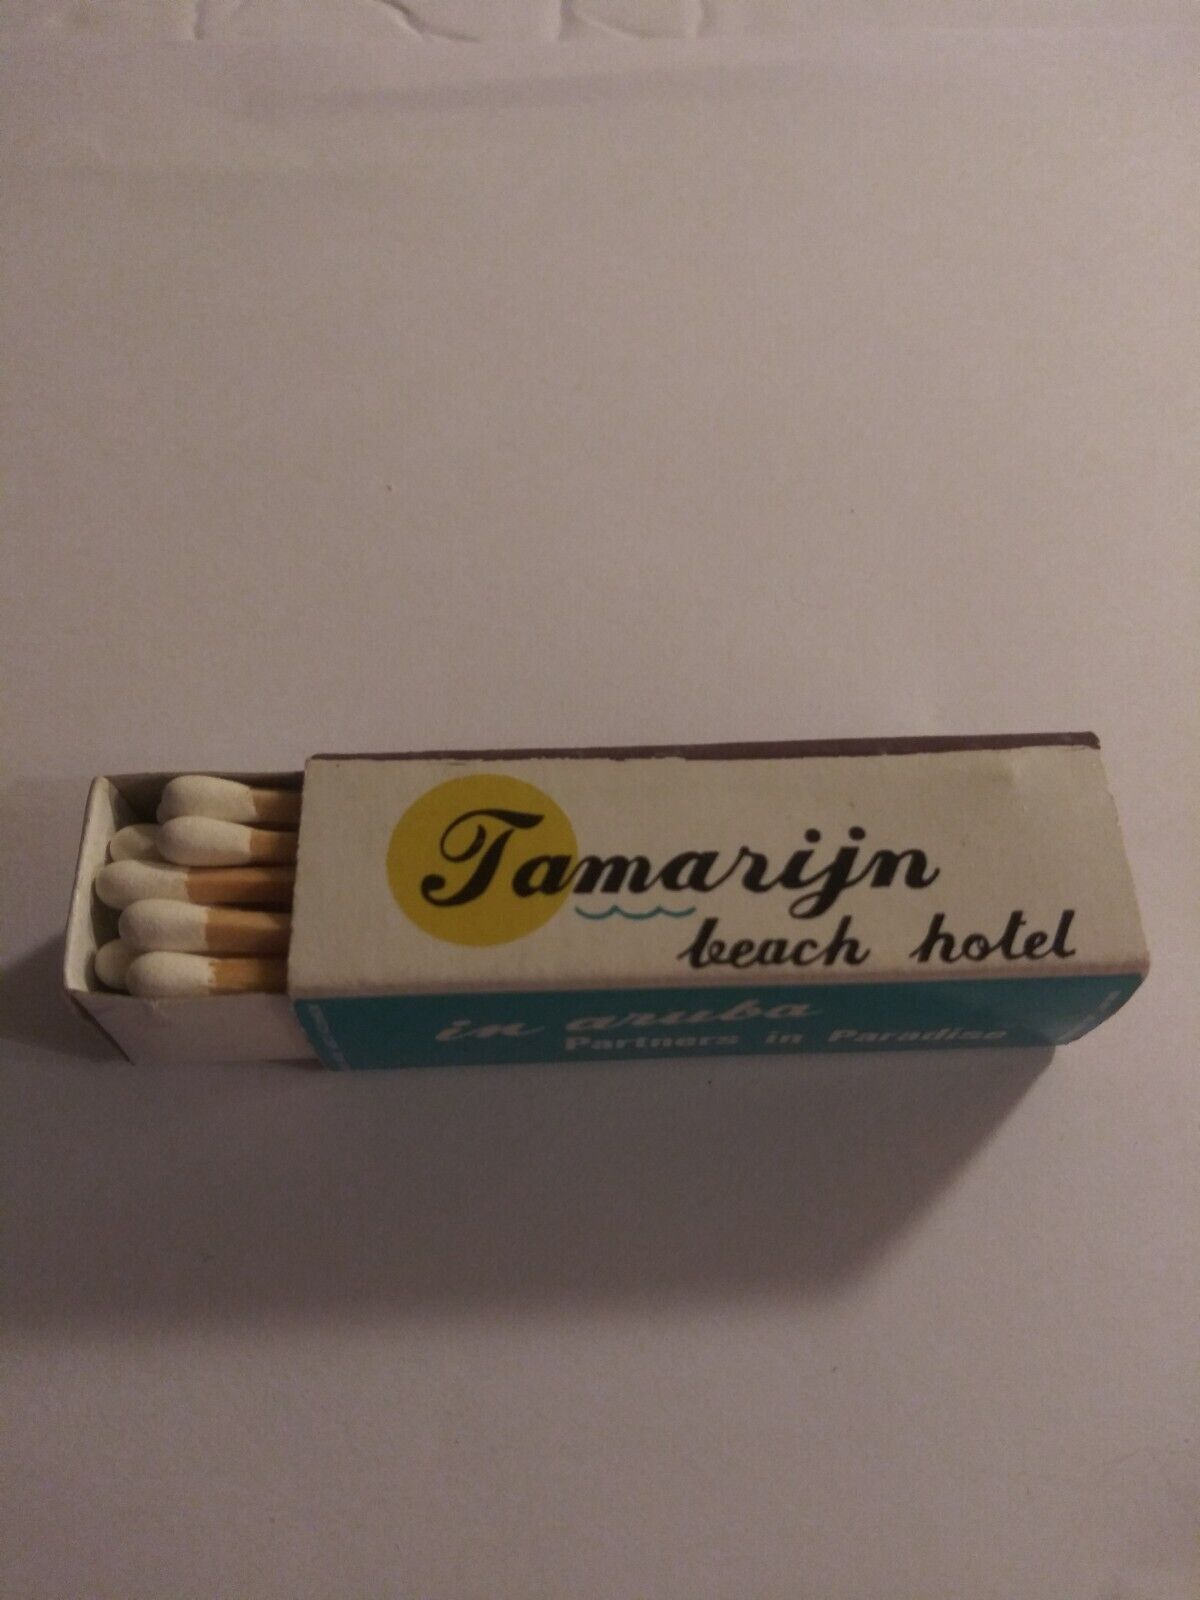 Vintage Wooden Matches From Tamarijn Beach Hotel In Aruba